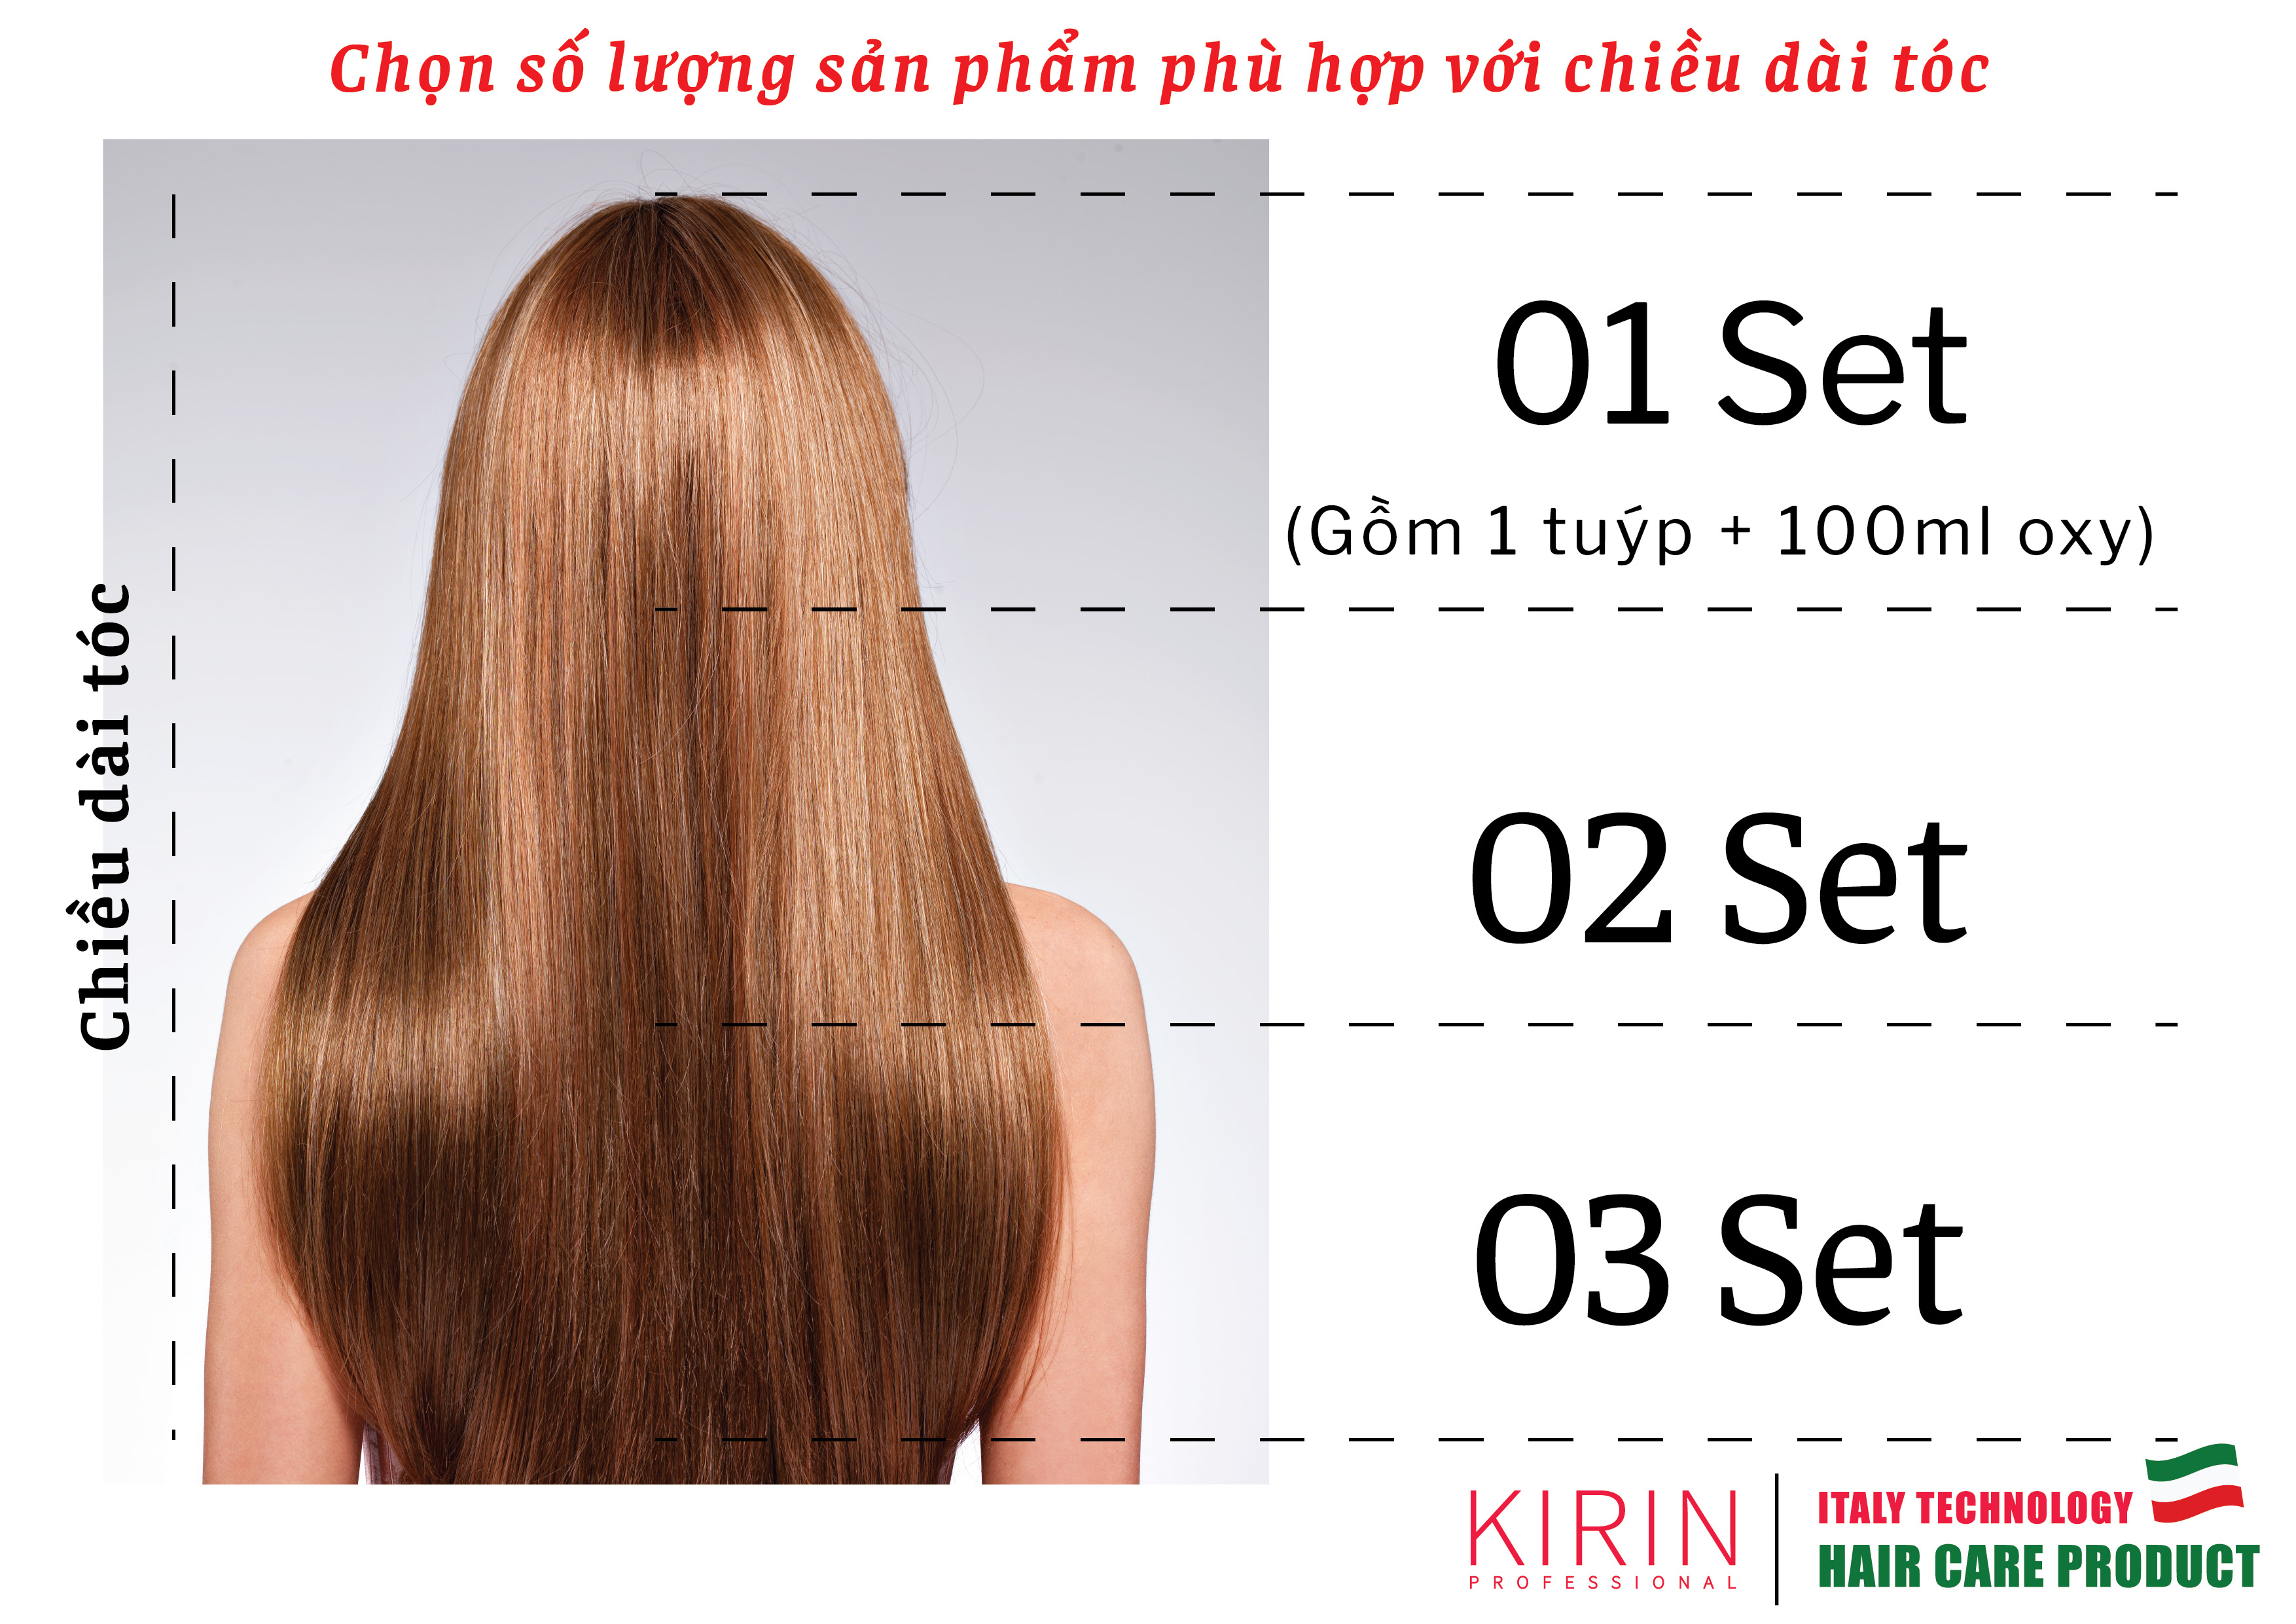 Kem nhuộm tóc collagen kirin (3/0 - Màu đen) - Nhuộm tóc bạc, nhuộm tóc màu đen